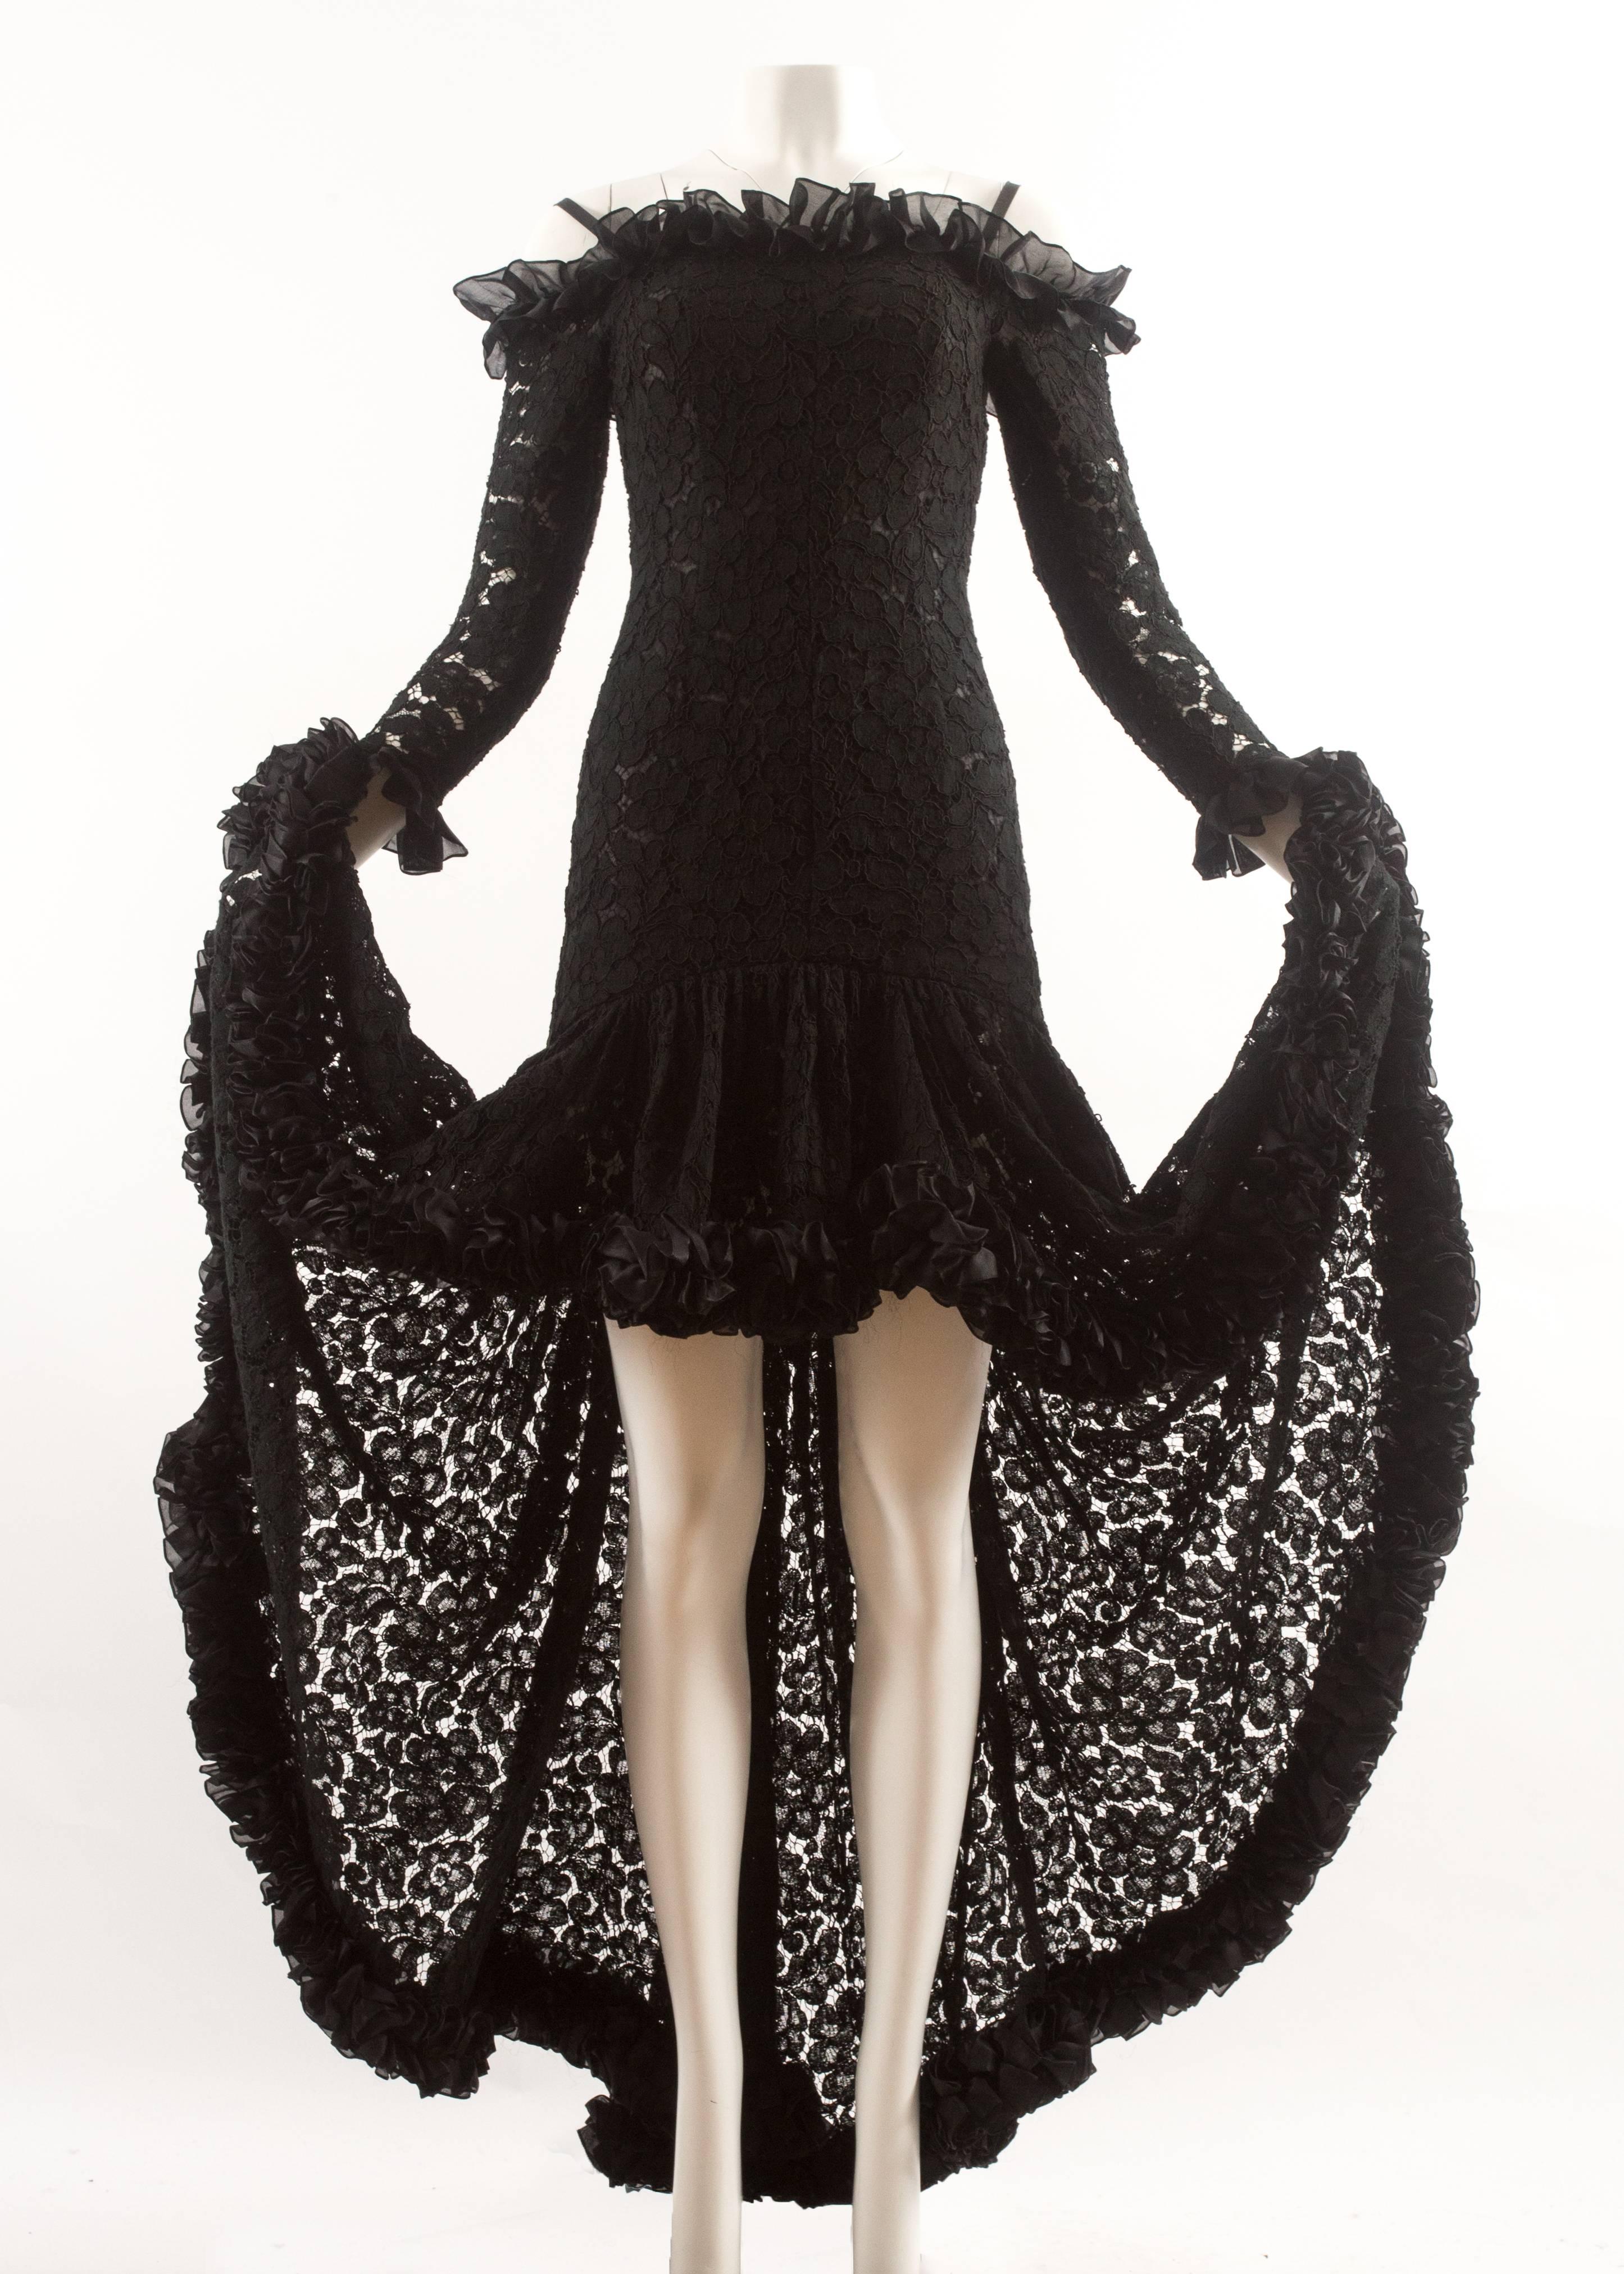 Yves Saint Laurent Autumn-Winter 1987 black lace flamenco evening dress with ruffled trim